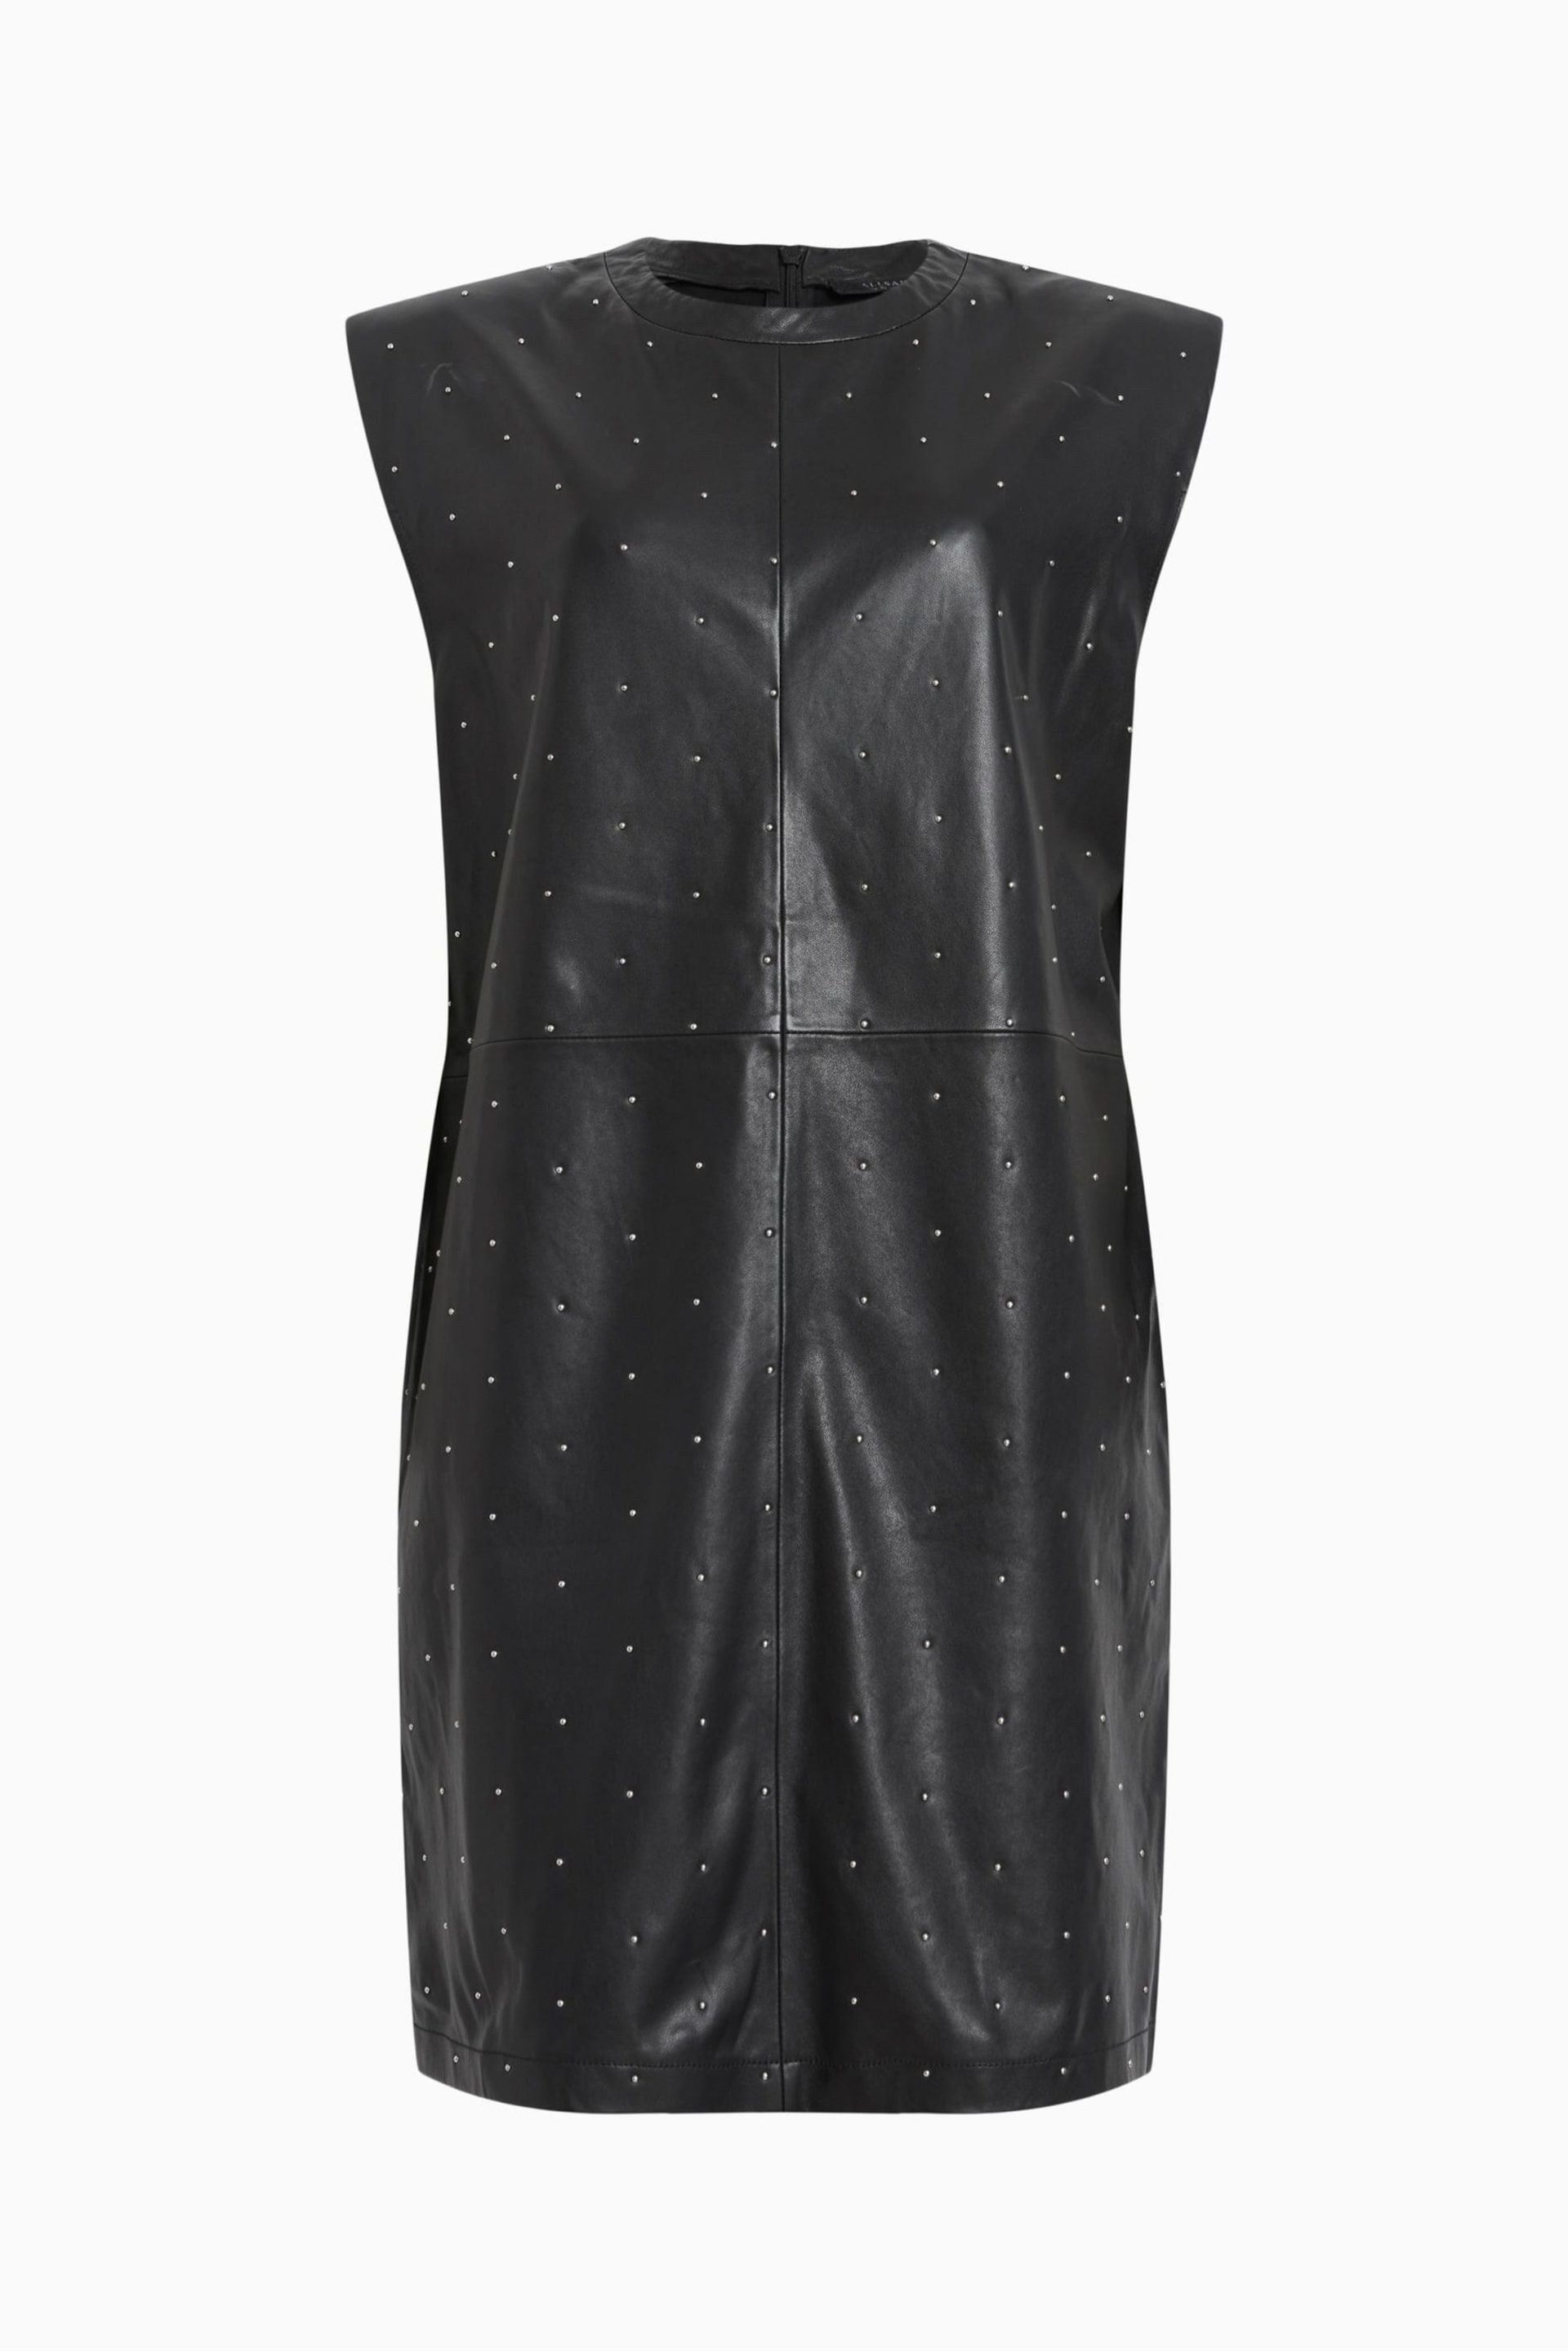 AllSaints Black Pinstud Mika Dress - Image 6 of 6